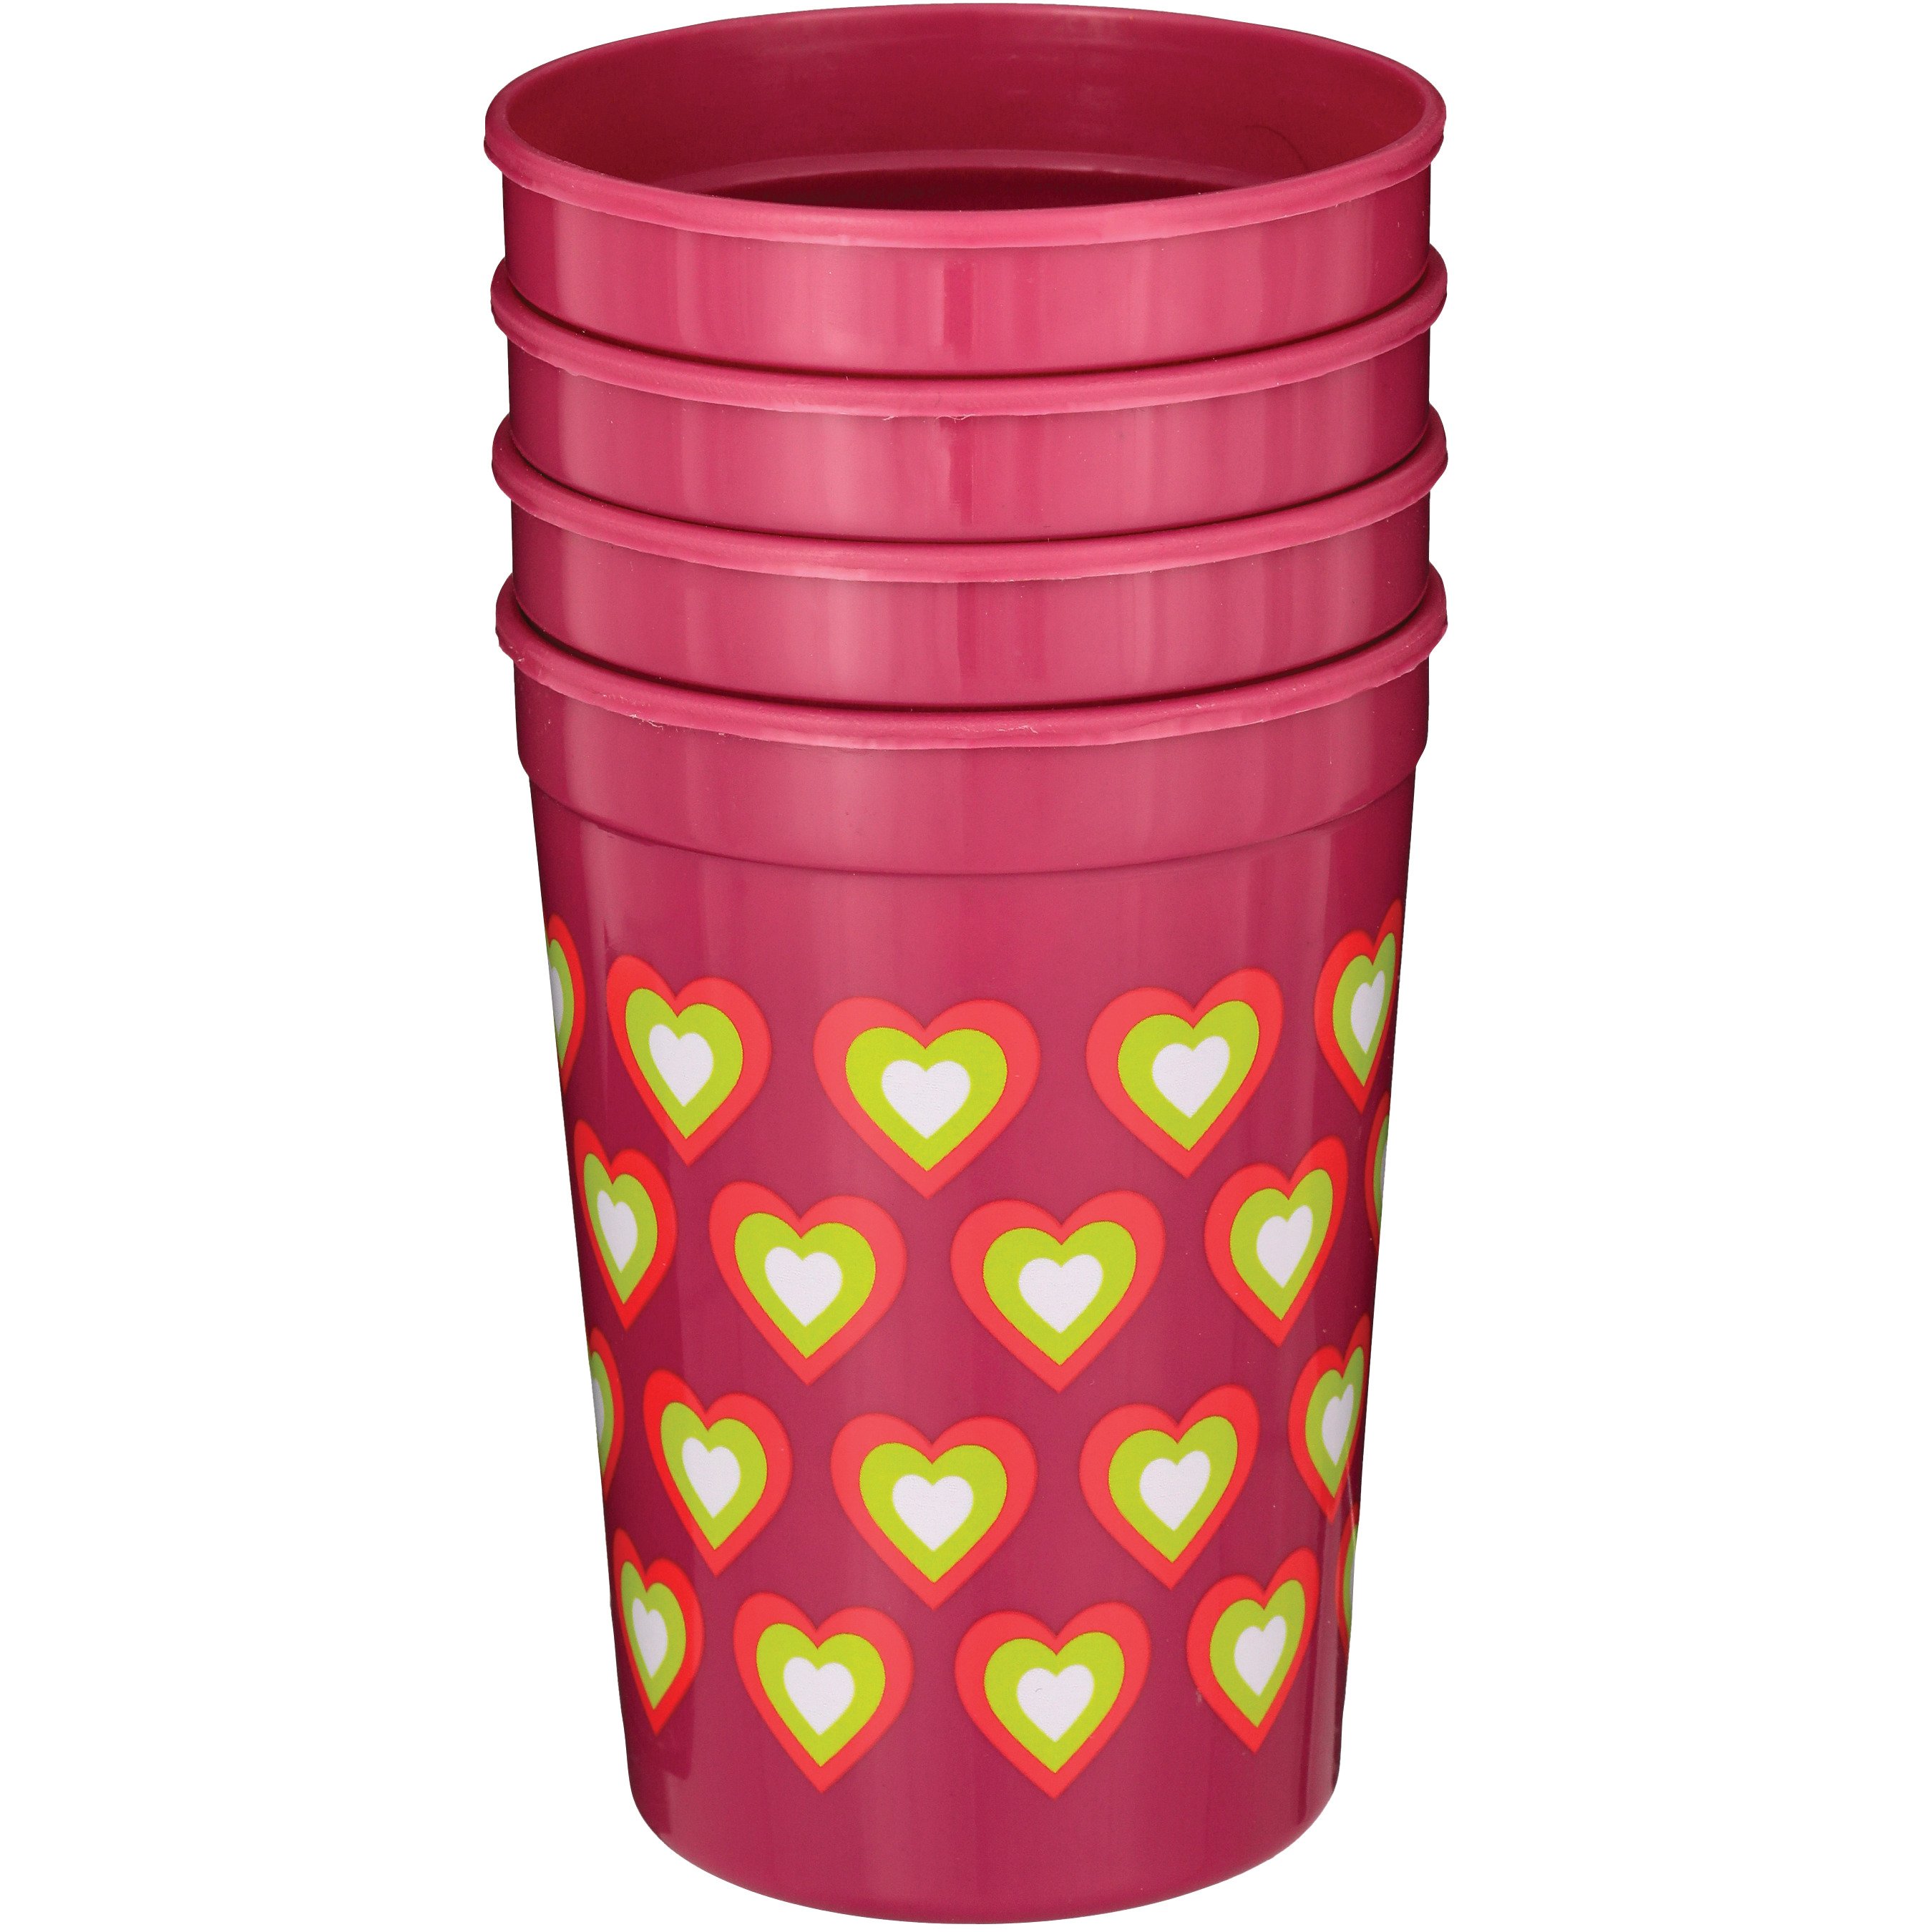 Destination Holiday Valentine's Day 10 oz Party Cups - Shop Seasonal Decor  at H-E-B